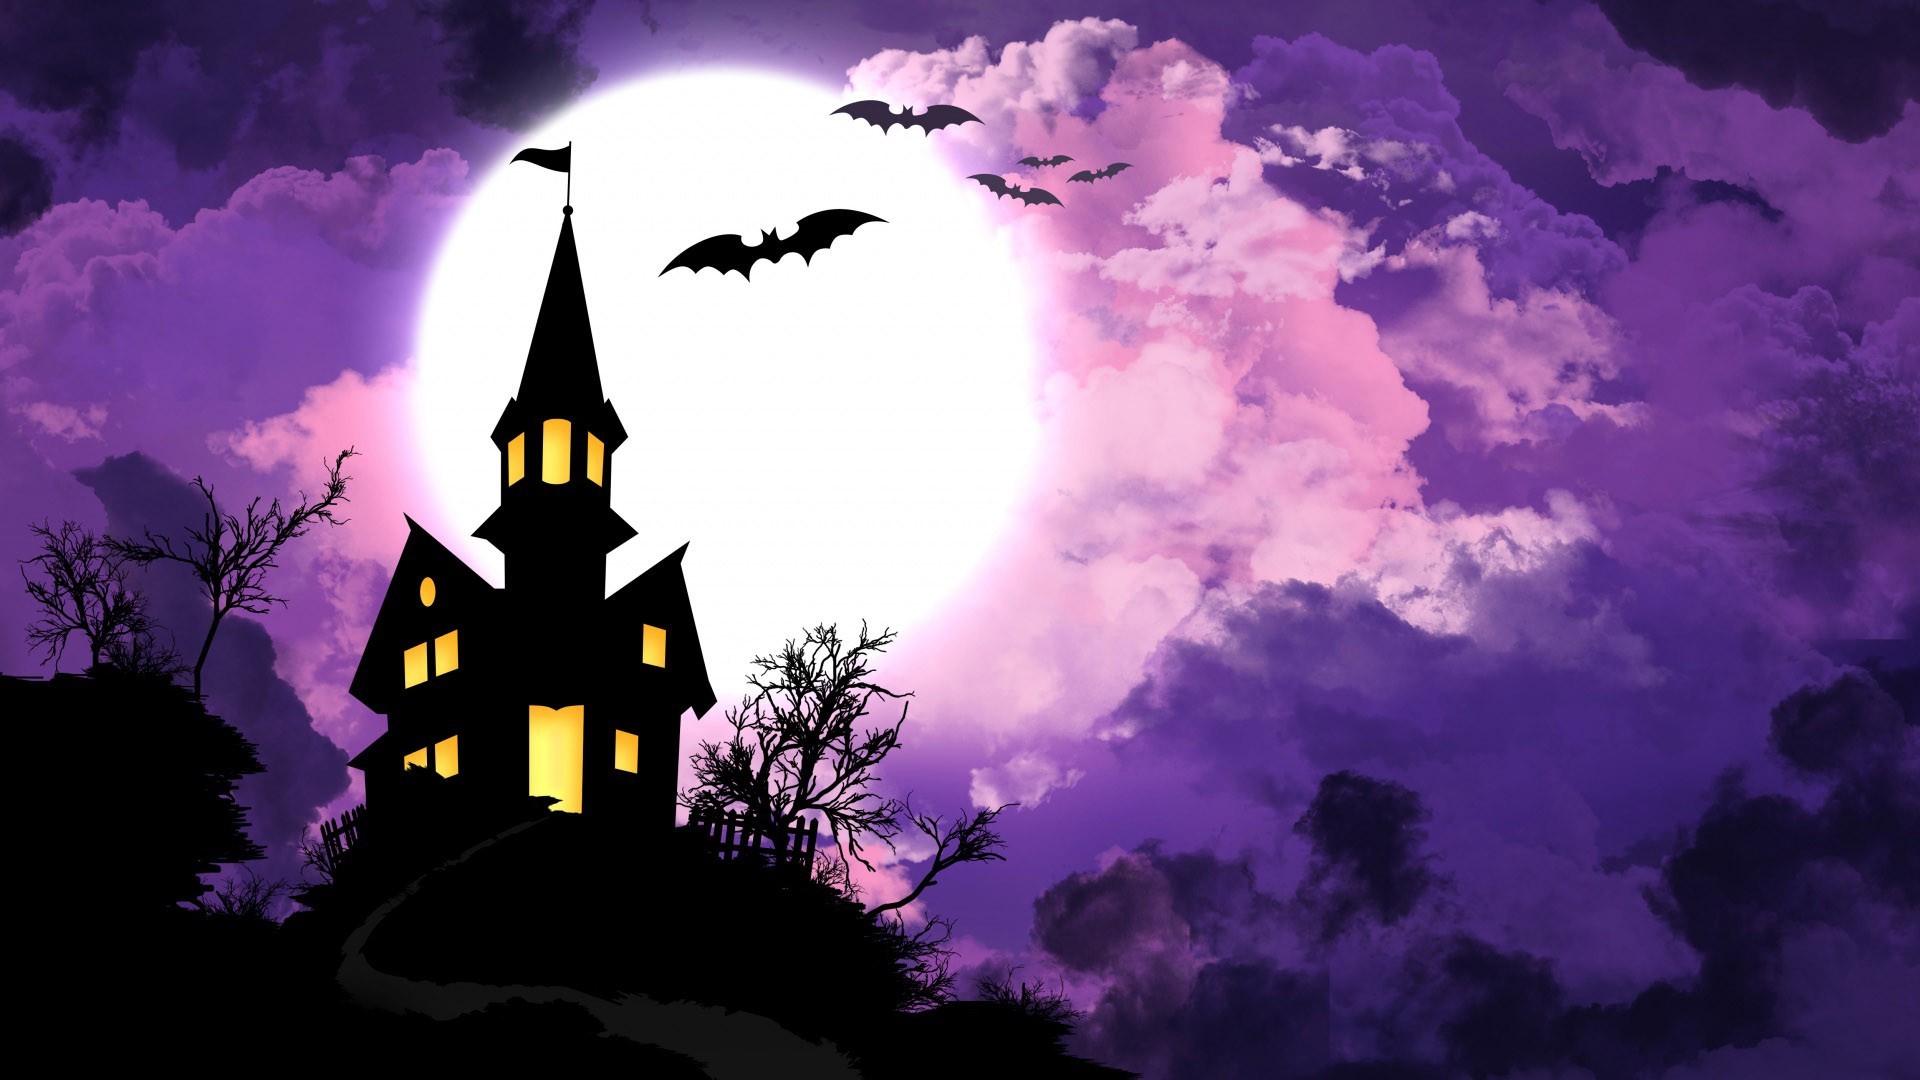 Free download Halloween Backgrounds for desktop